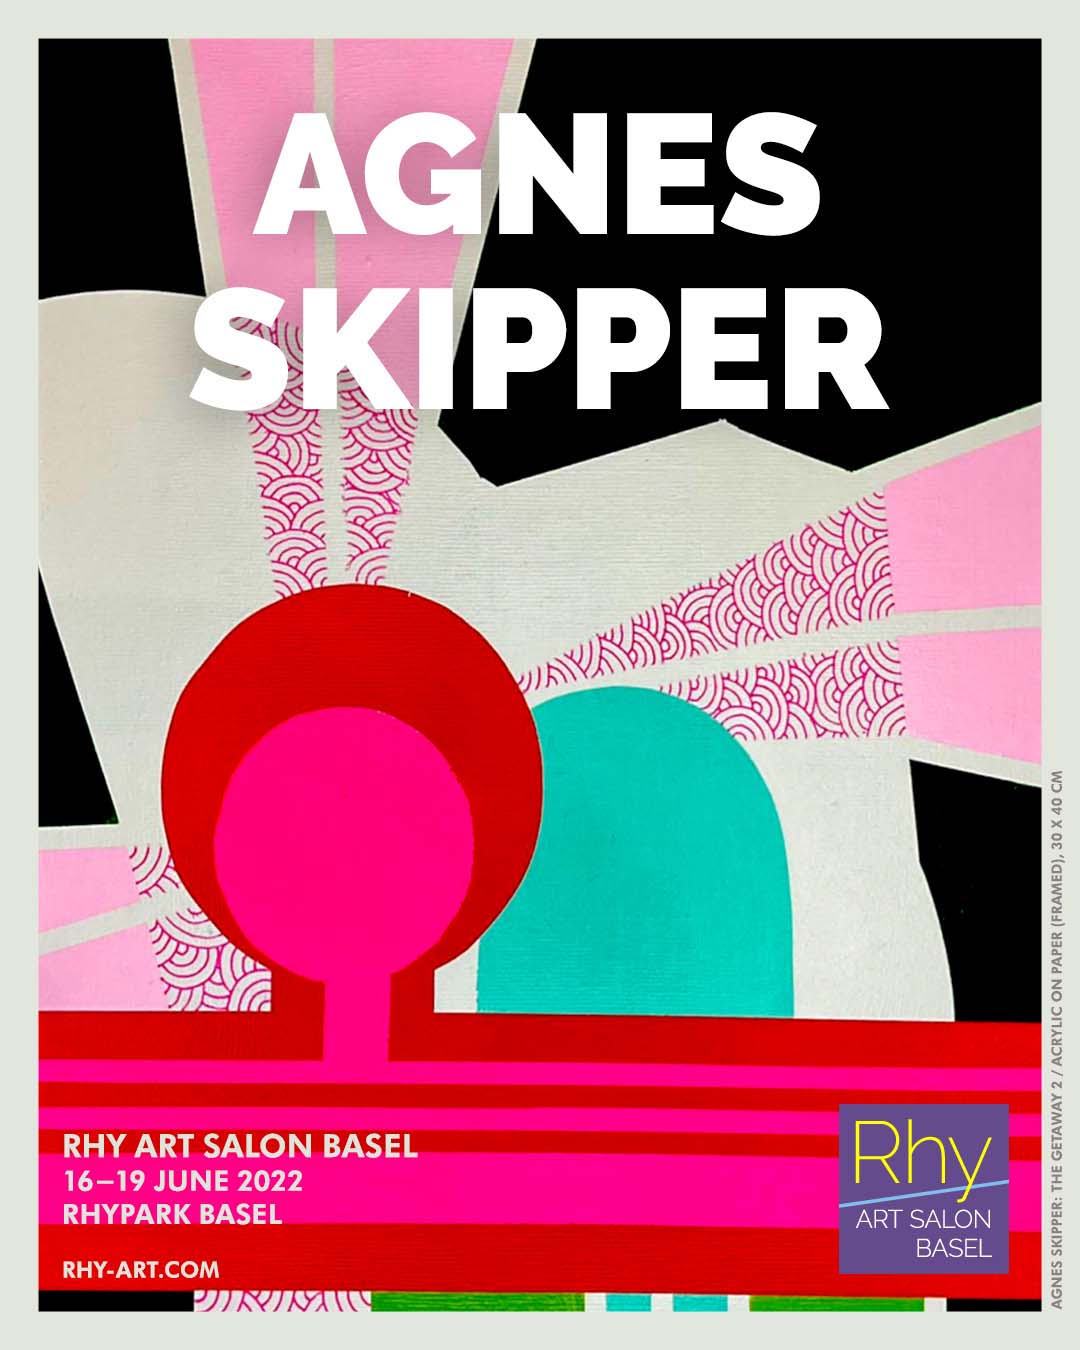 Agnes Skipper at Rhy Art Salon Basel 2022